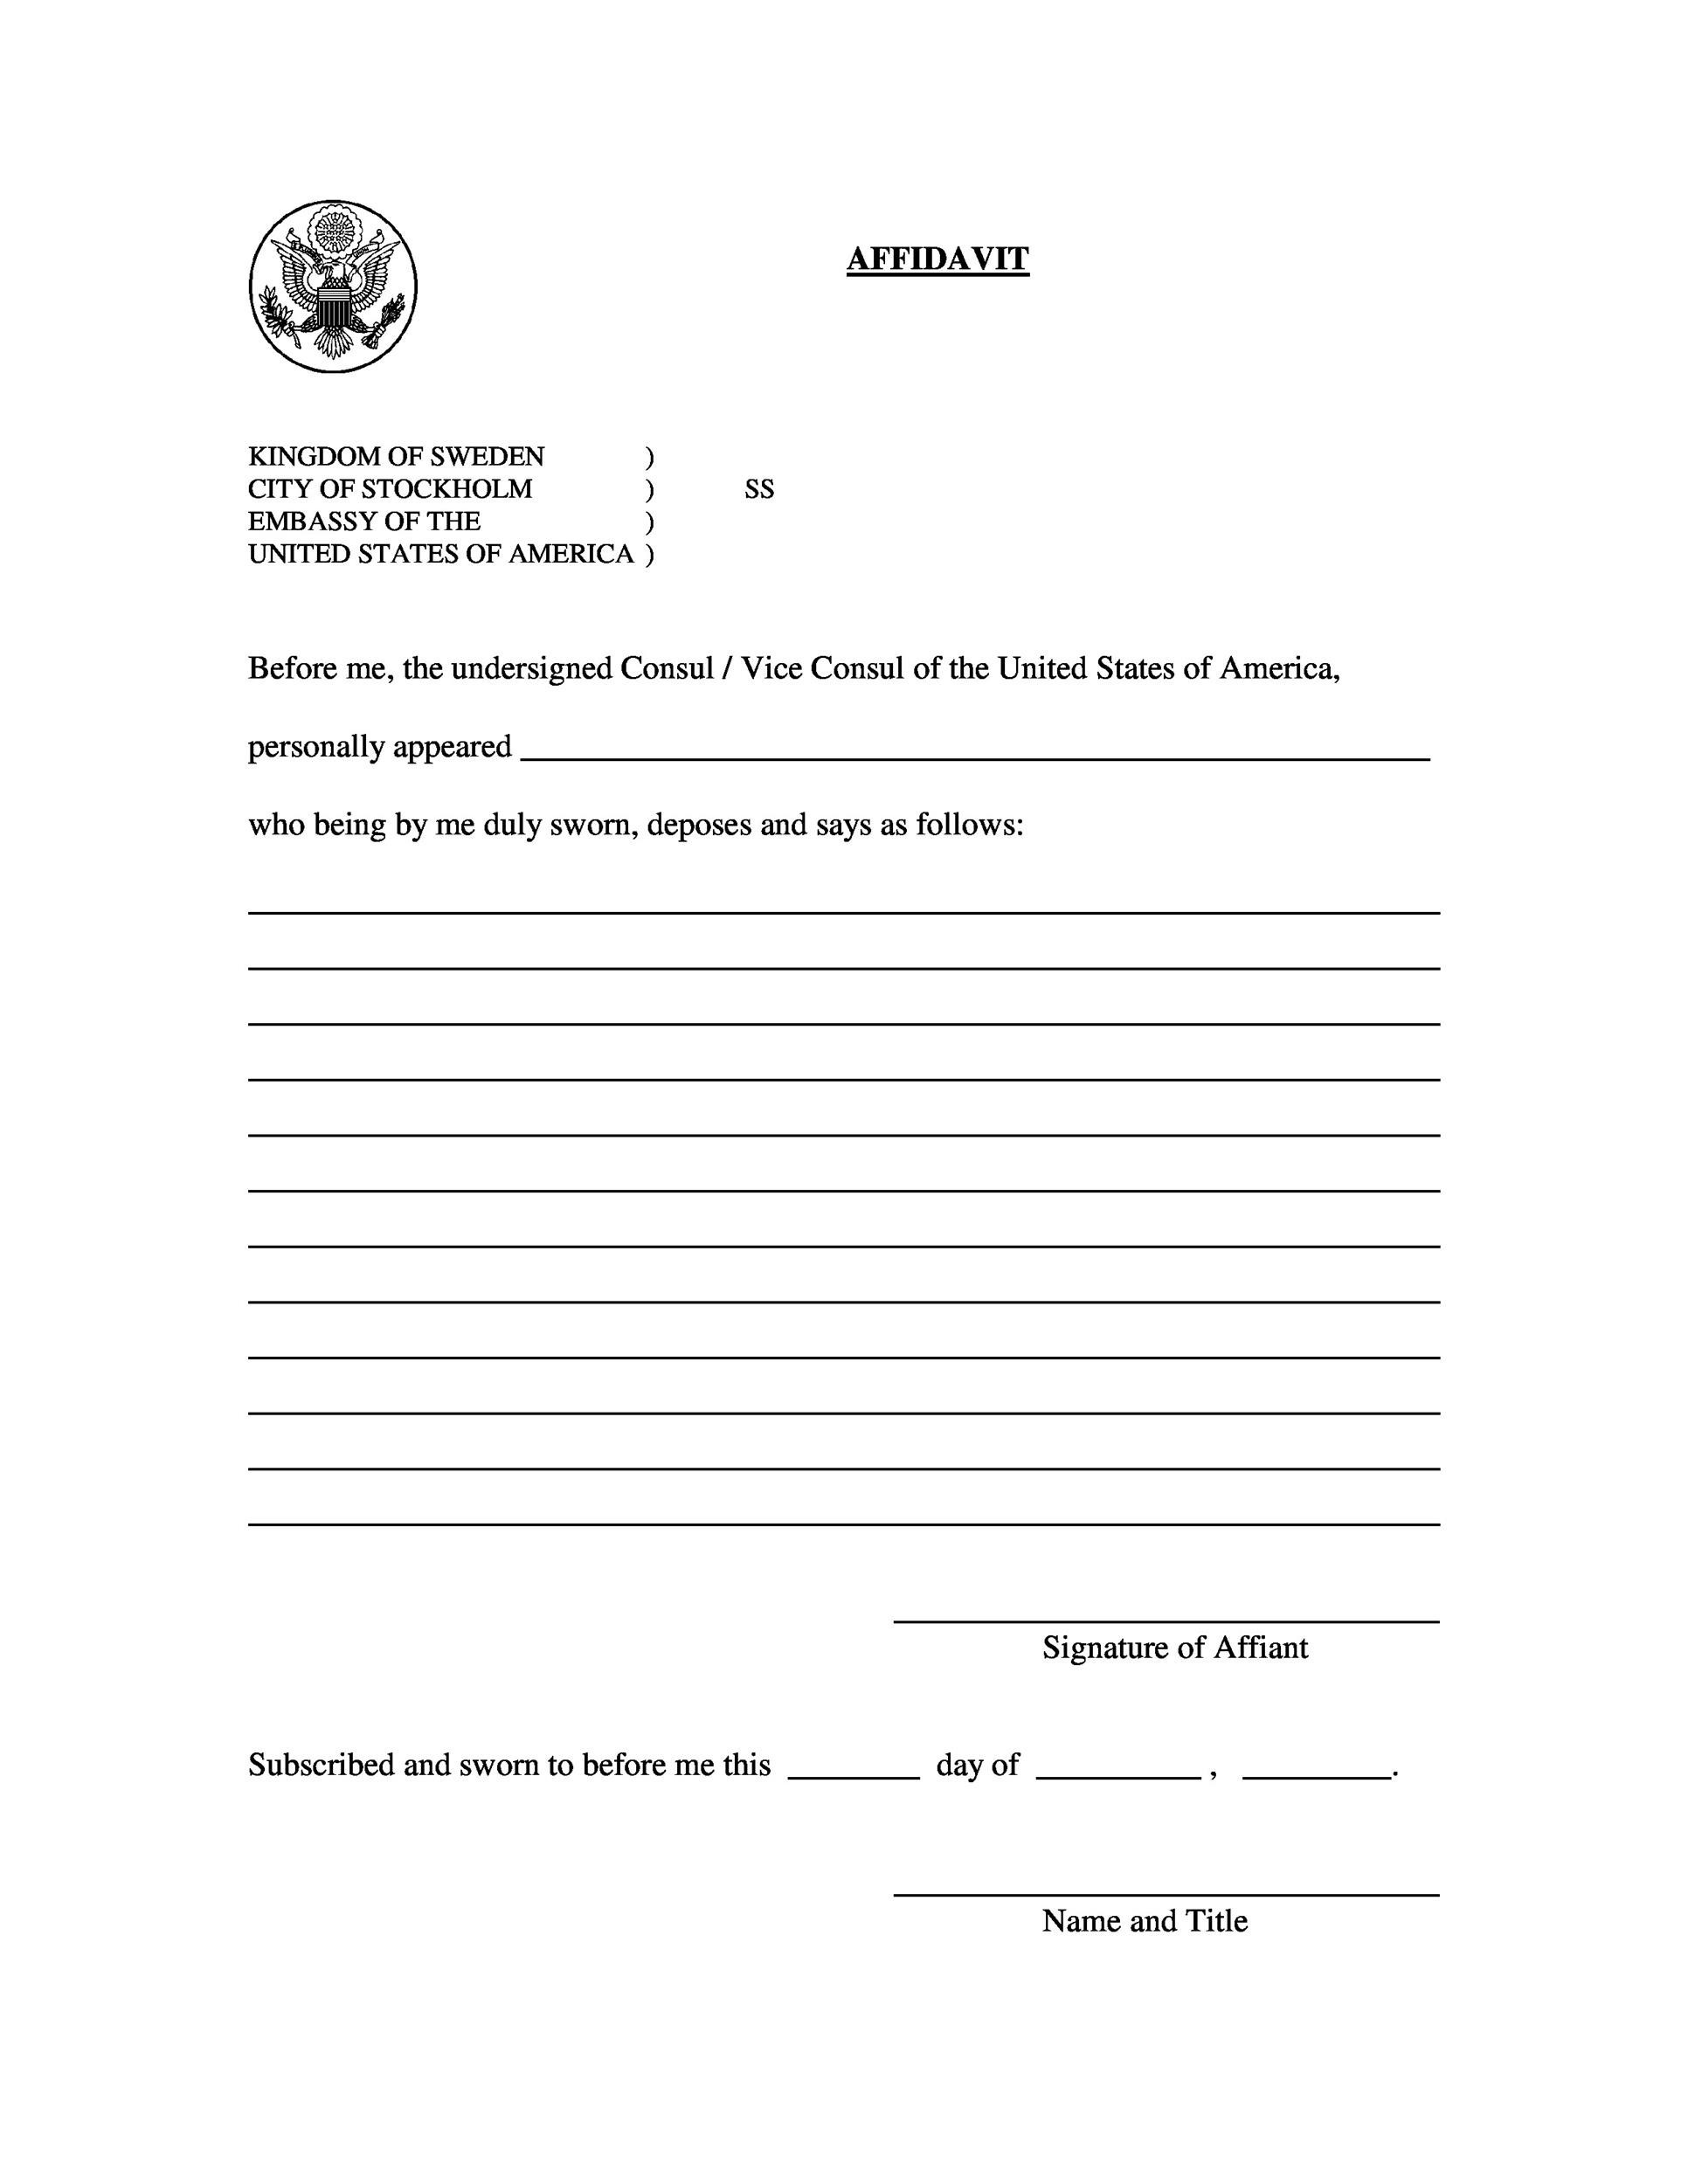 Free affidavit form 27